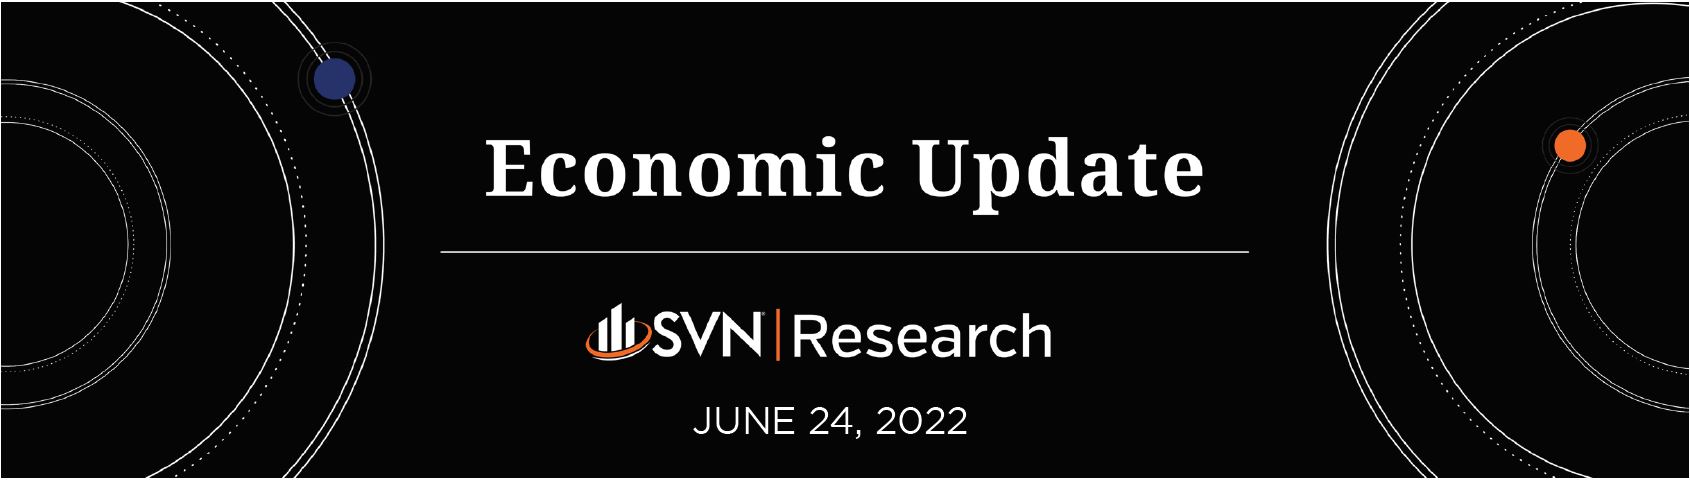 SVN | Research Economic Update 6.24.2022